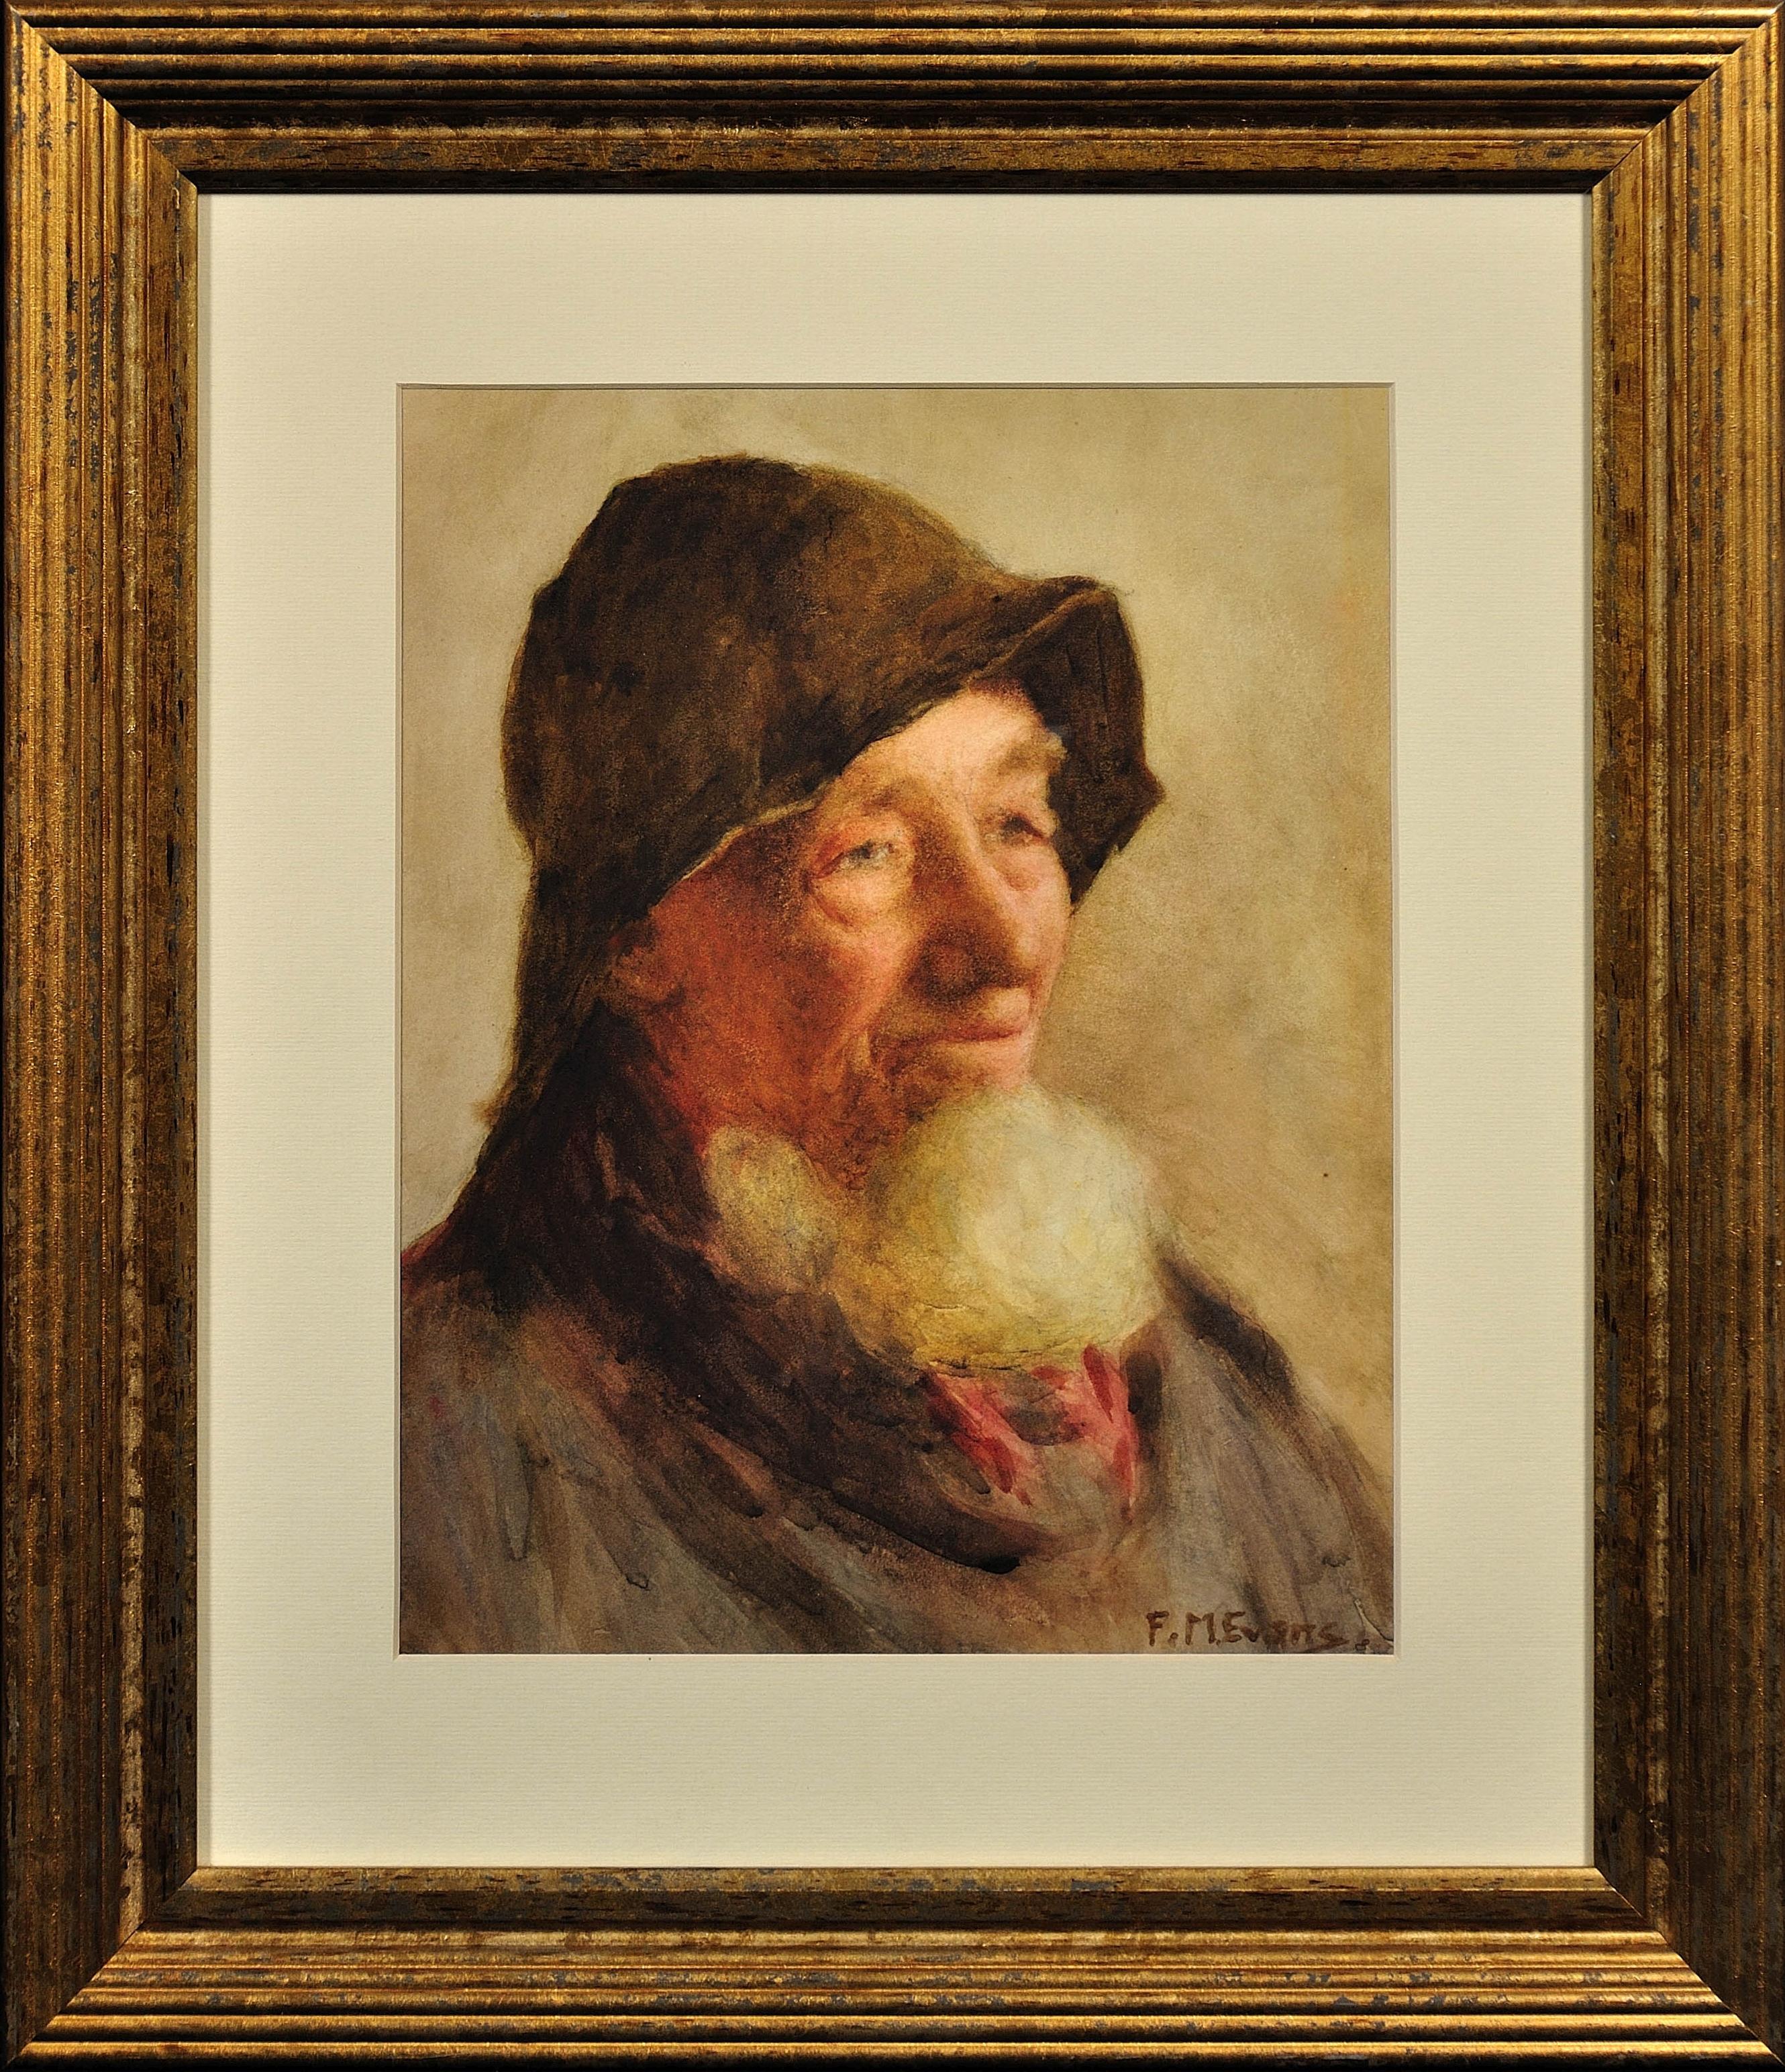 Frederick James McNamara Evans Figurative Art - Portrait of a Cornish Fisherman. Historical Social Record of Fishing Industry.